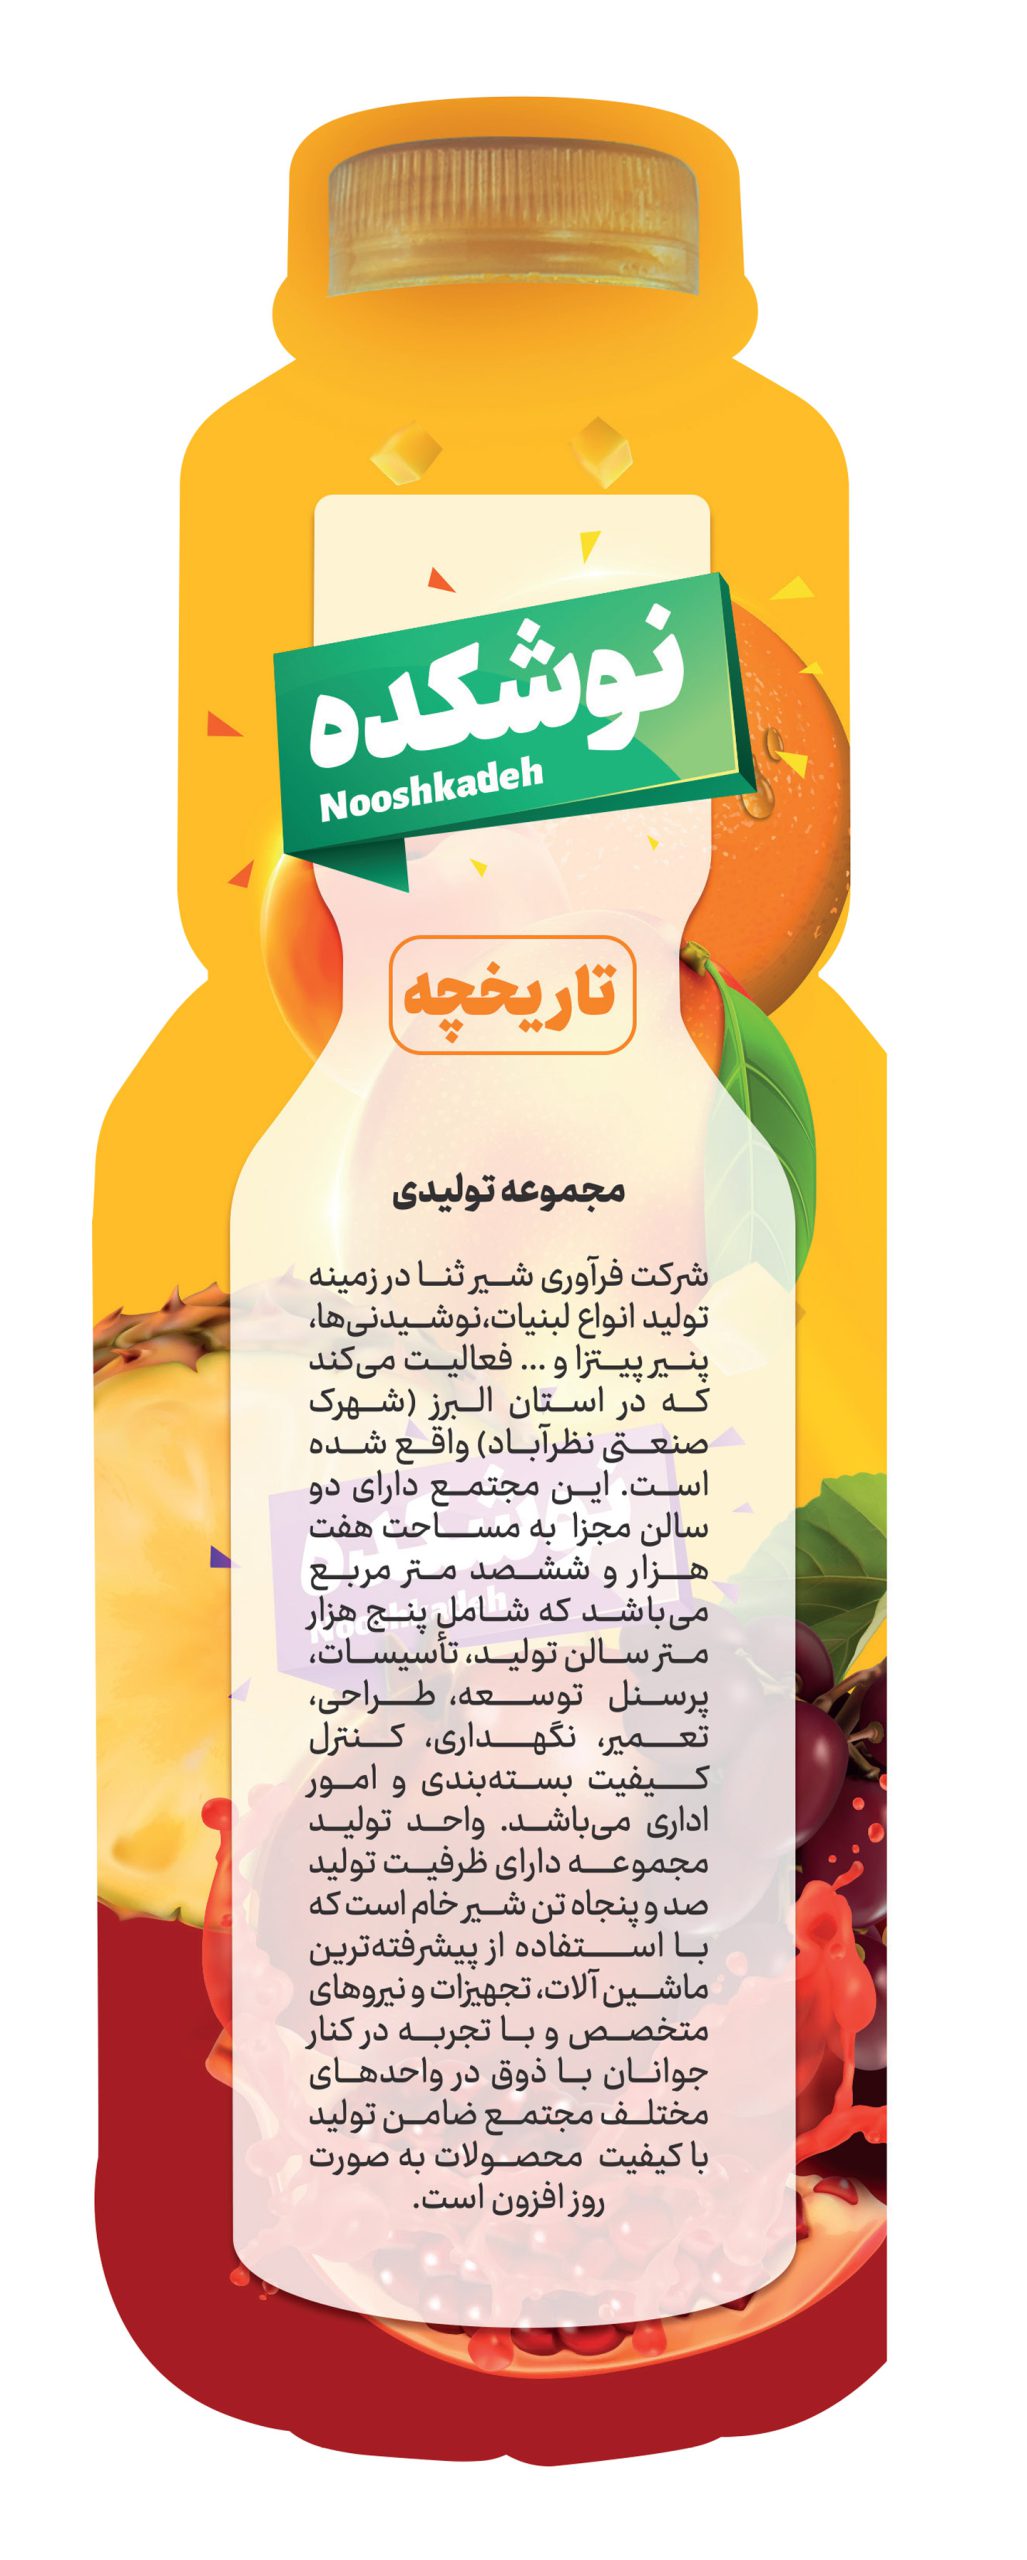 nooshkadeh-2-copy